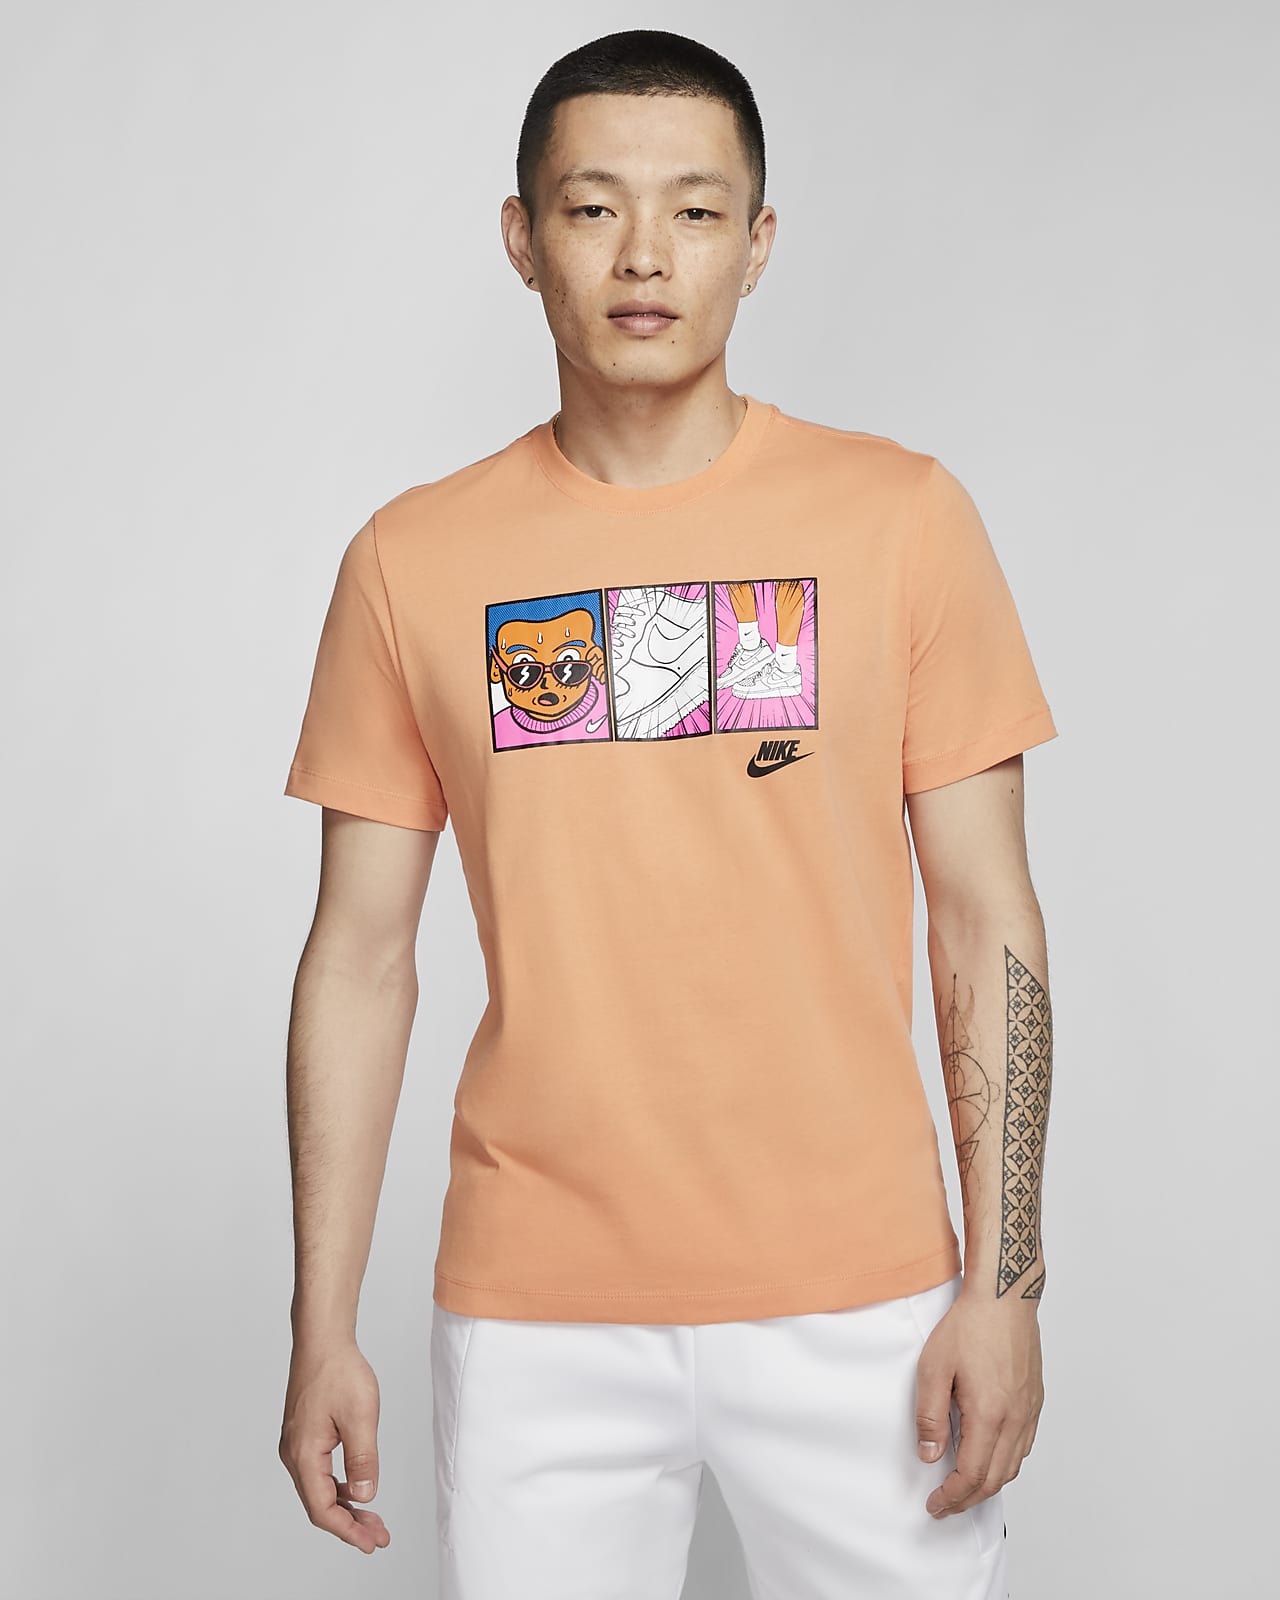 orange trance nike shirt